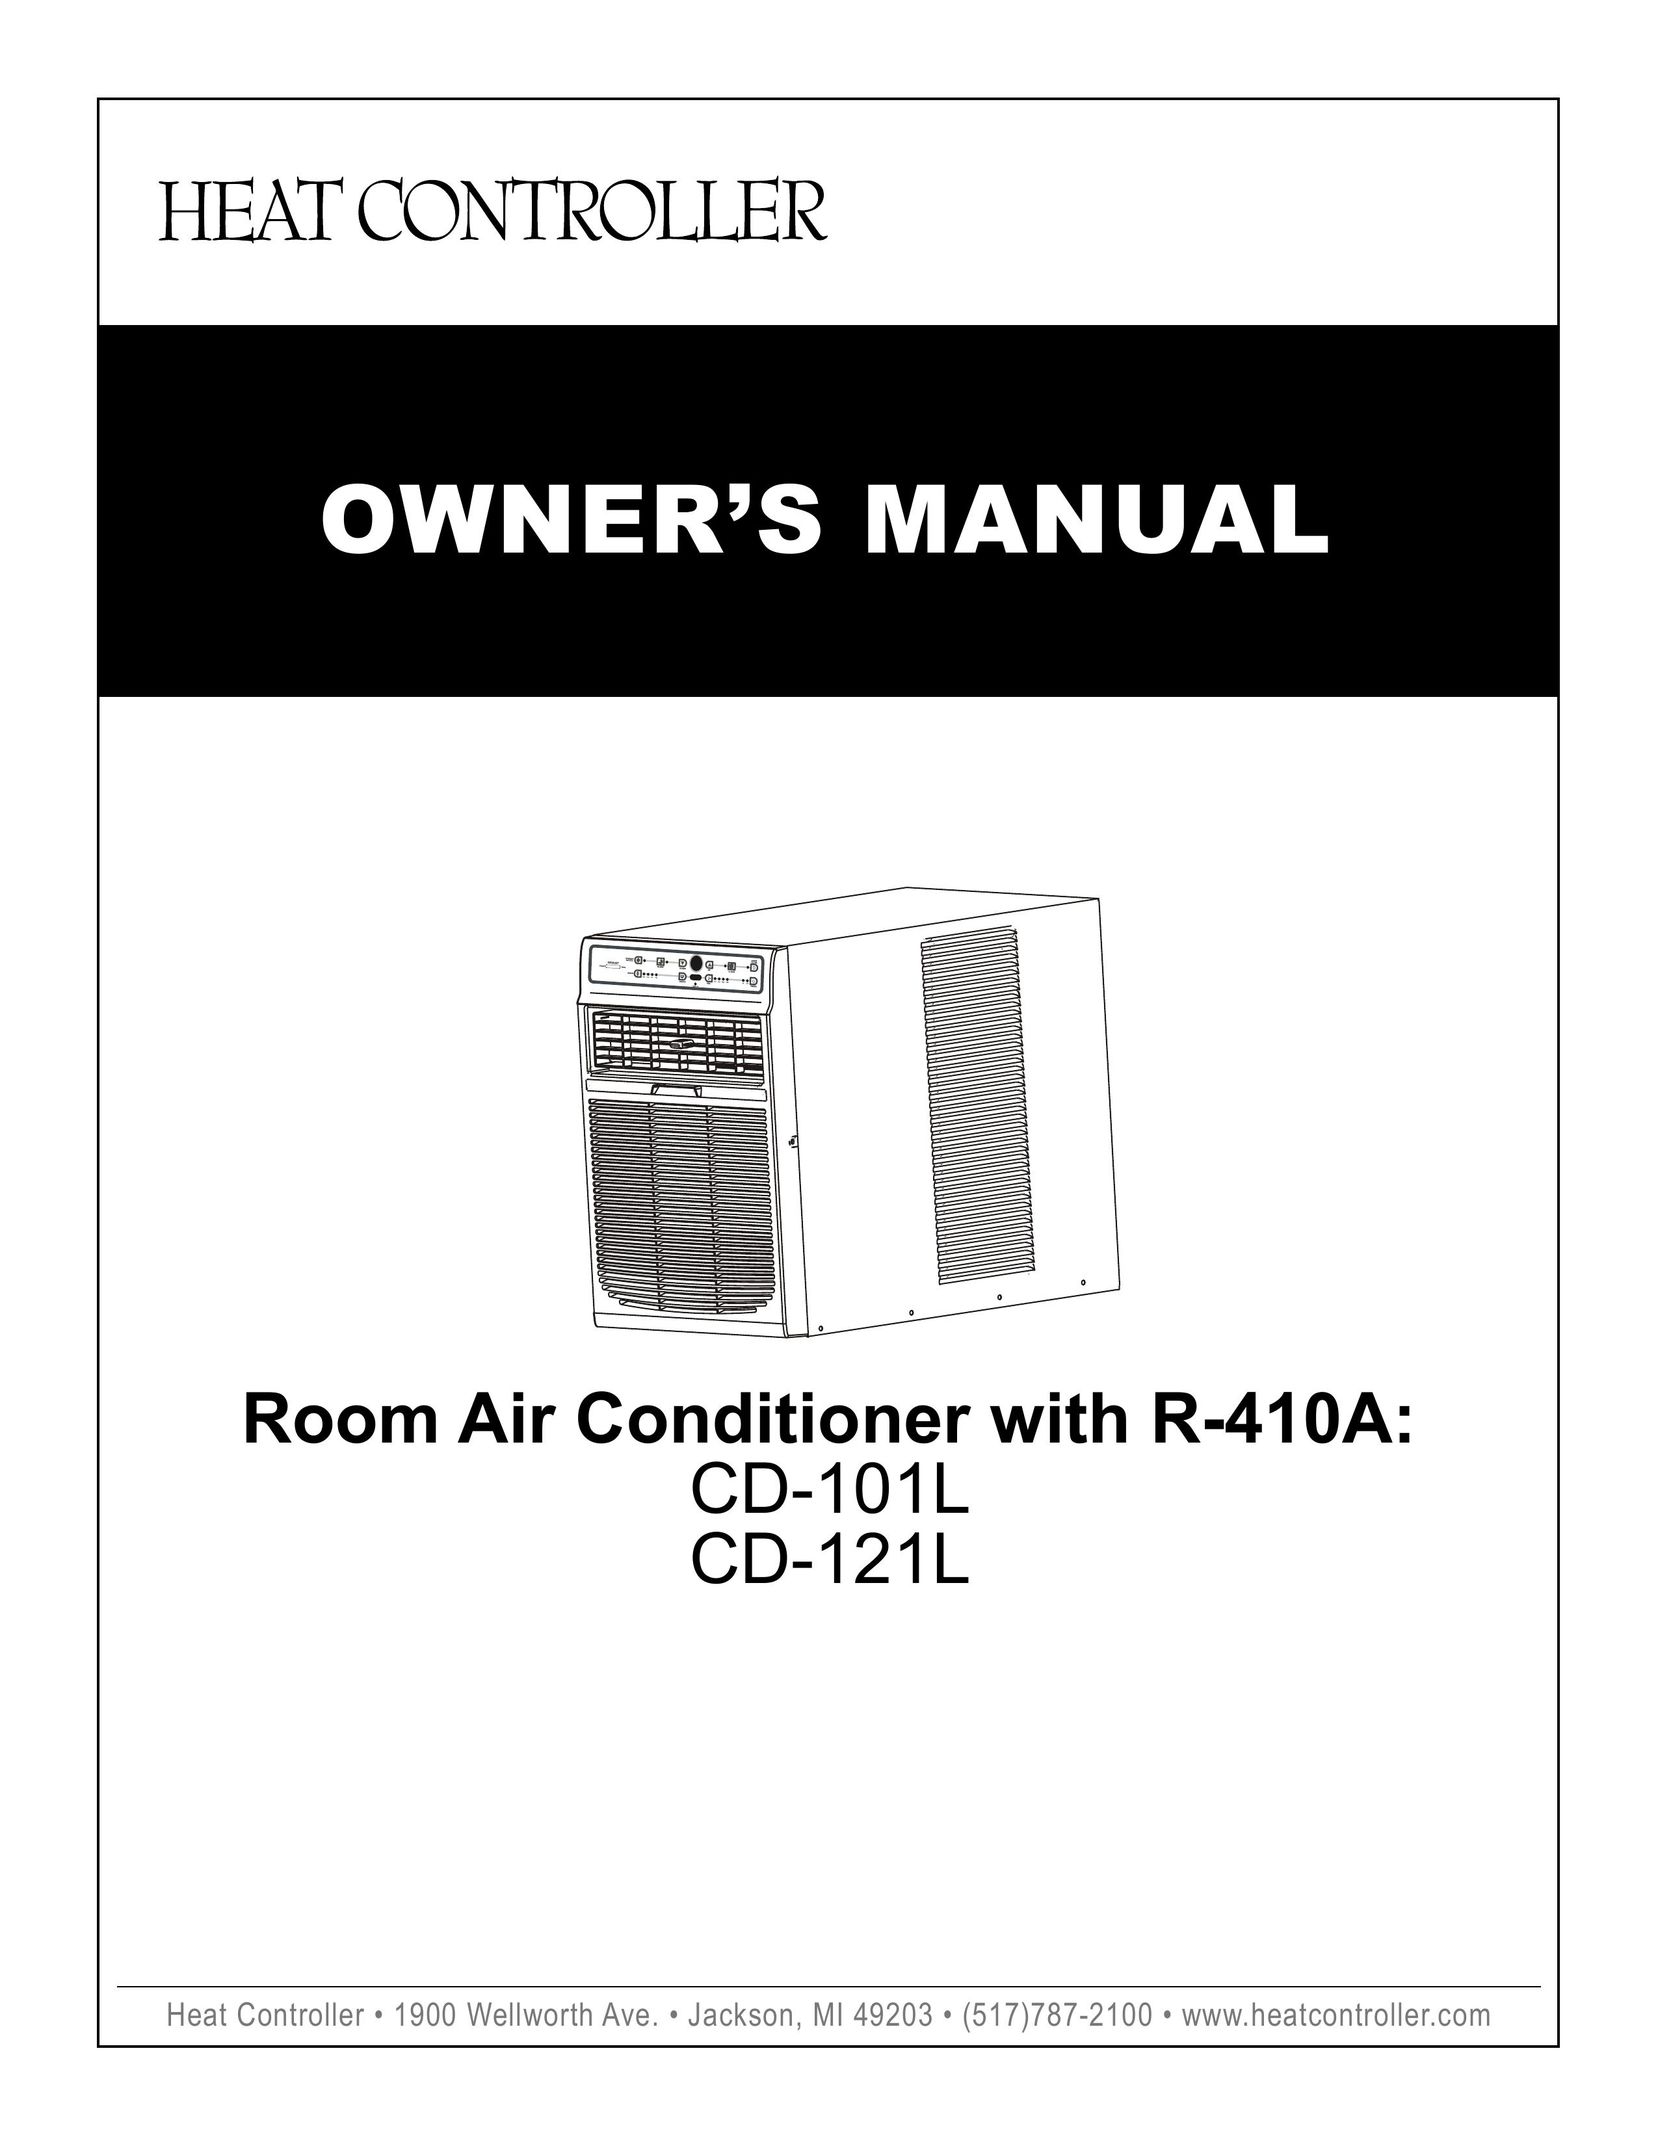 Heat Controller CD-121J Air Conditioner User Manual